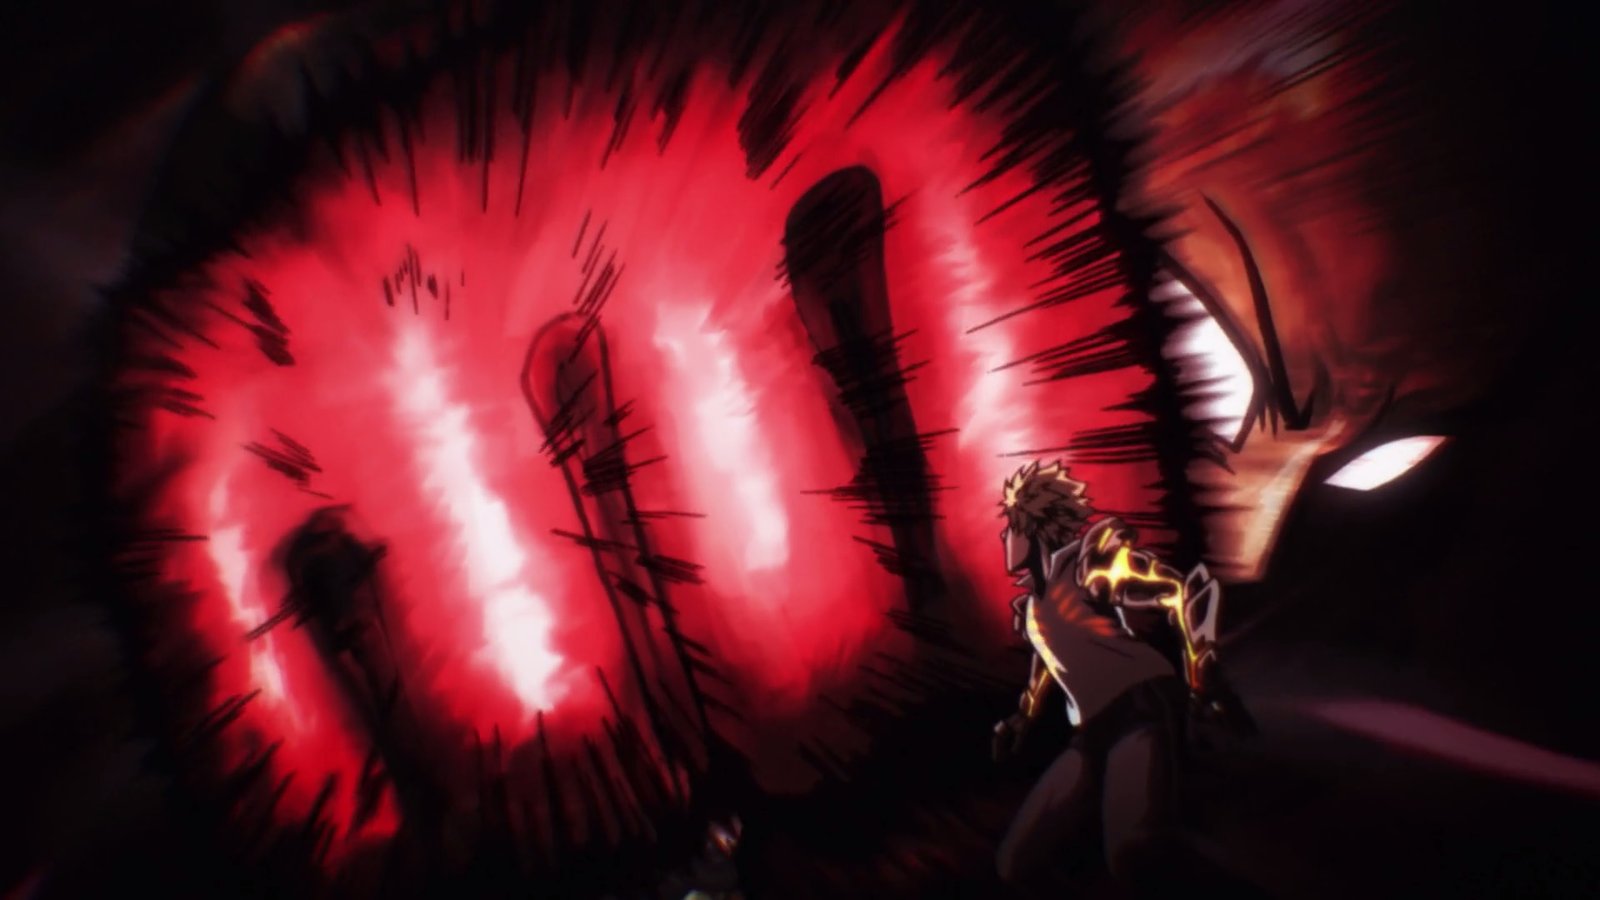 How One-Punch Man Explains Saitama's Immense Strength